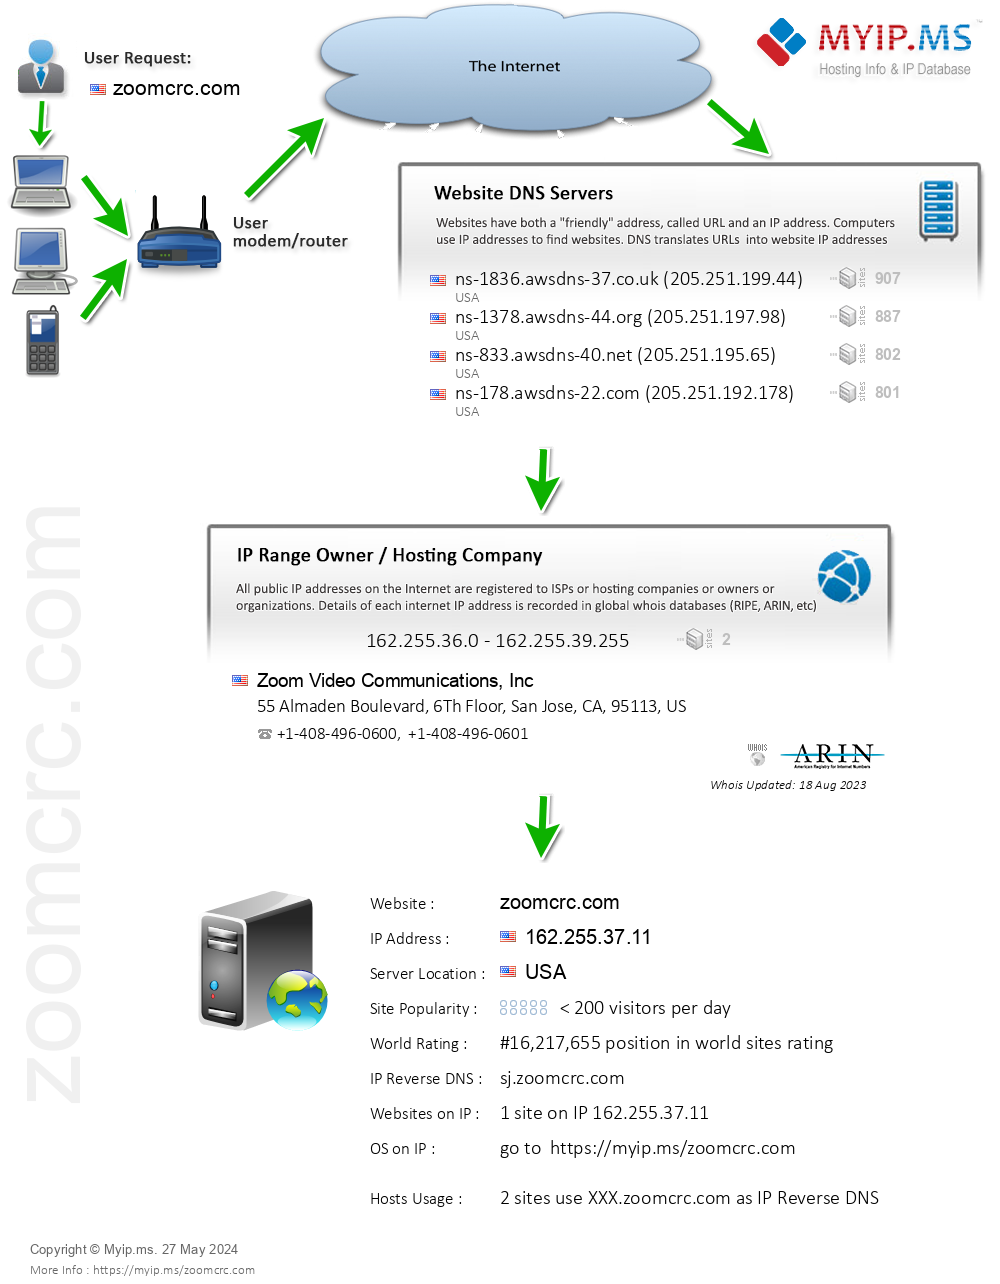 Zoomcrc.com - Website Hosting Visual IP Diagram